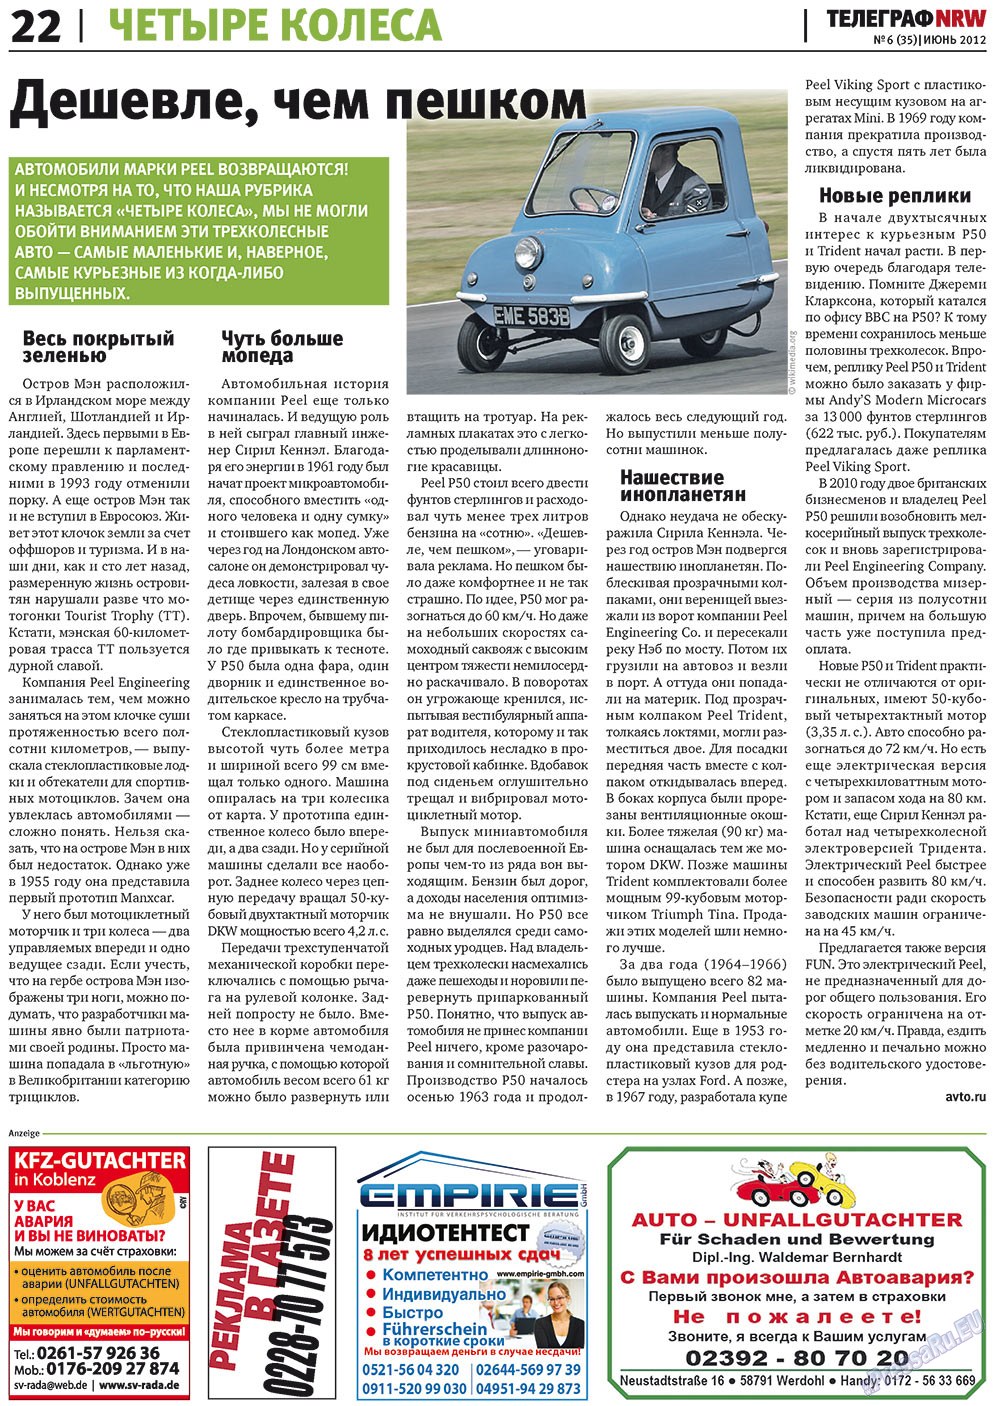 Телеграф NRW, газета. 2012 №6 стр.22